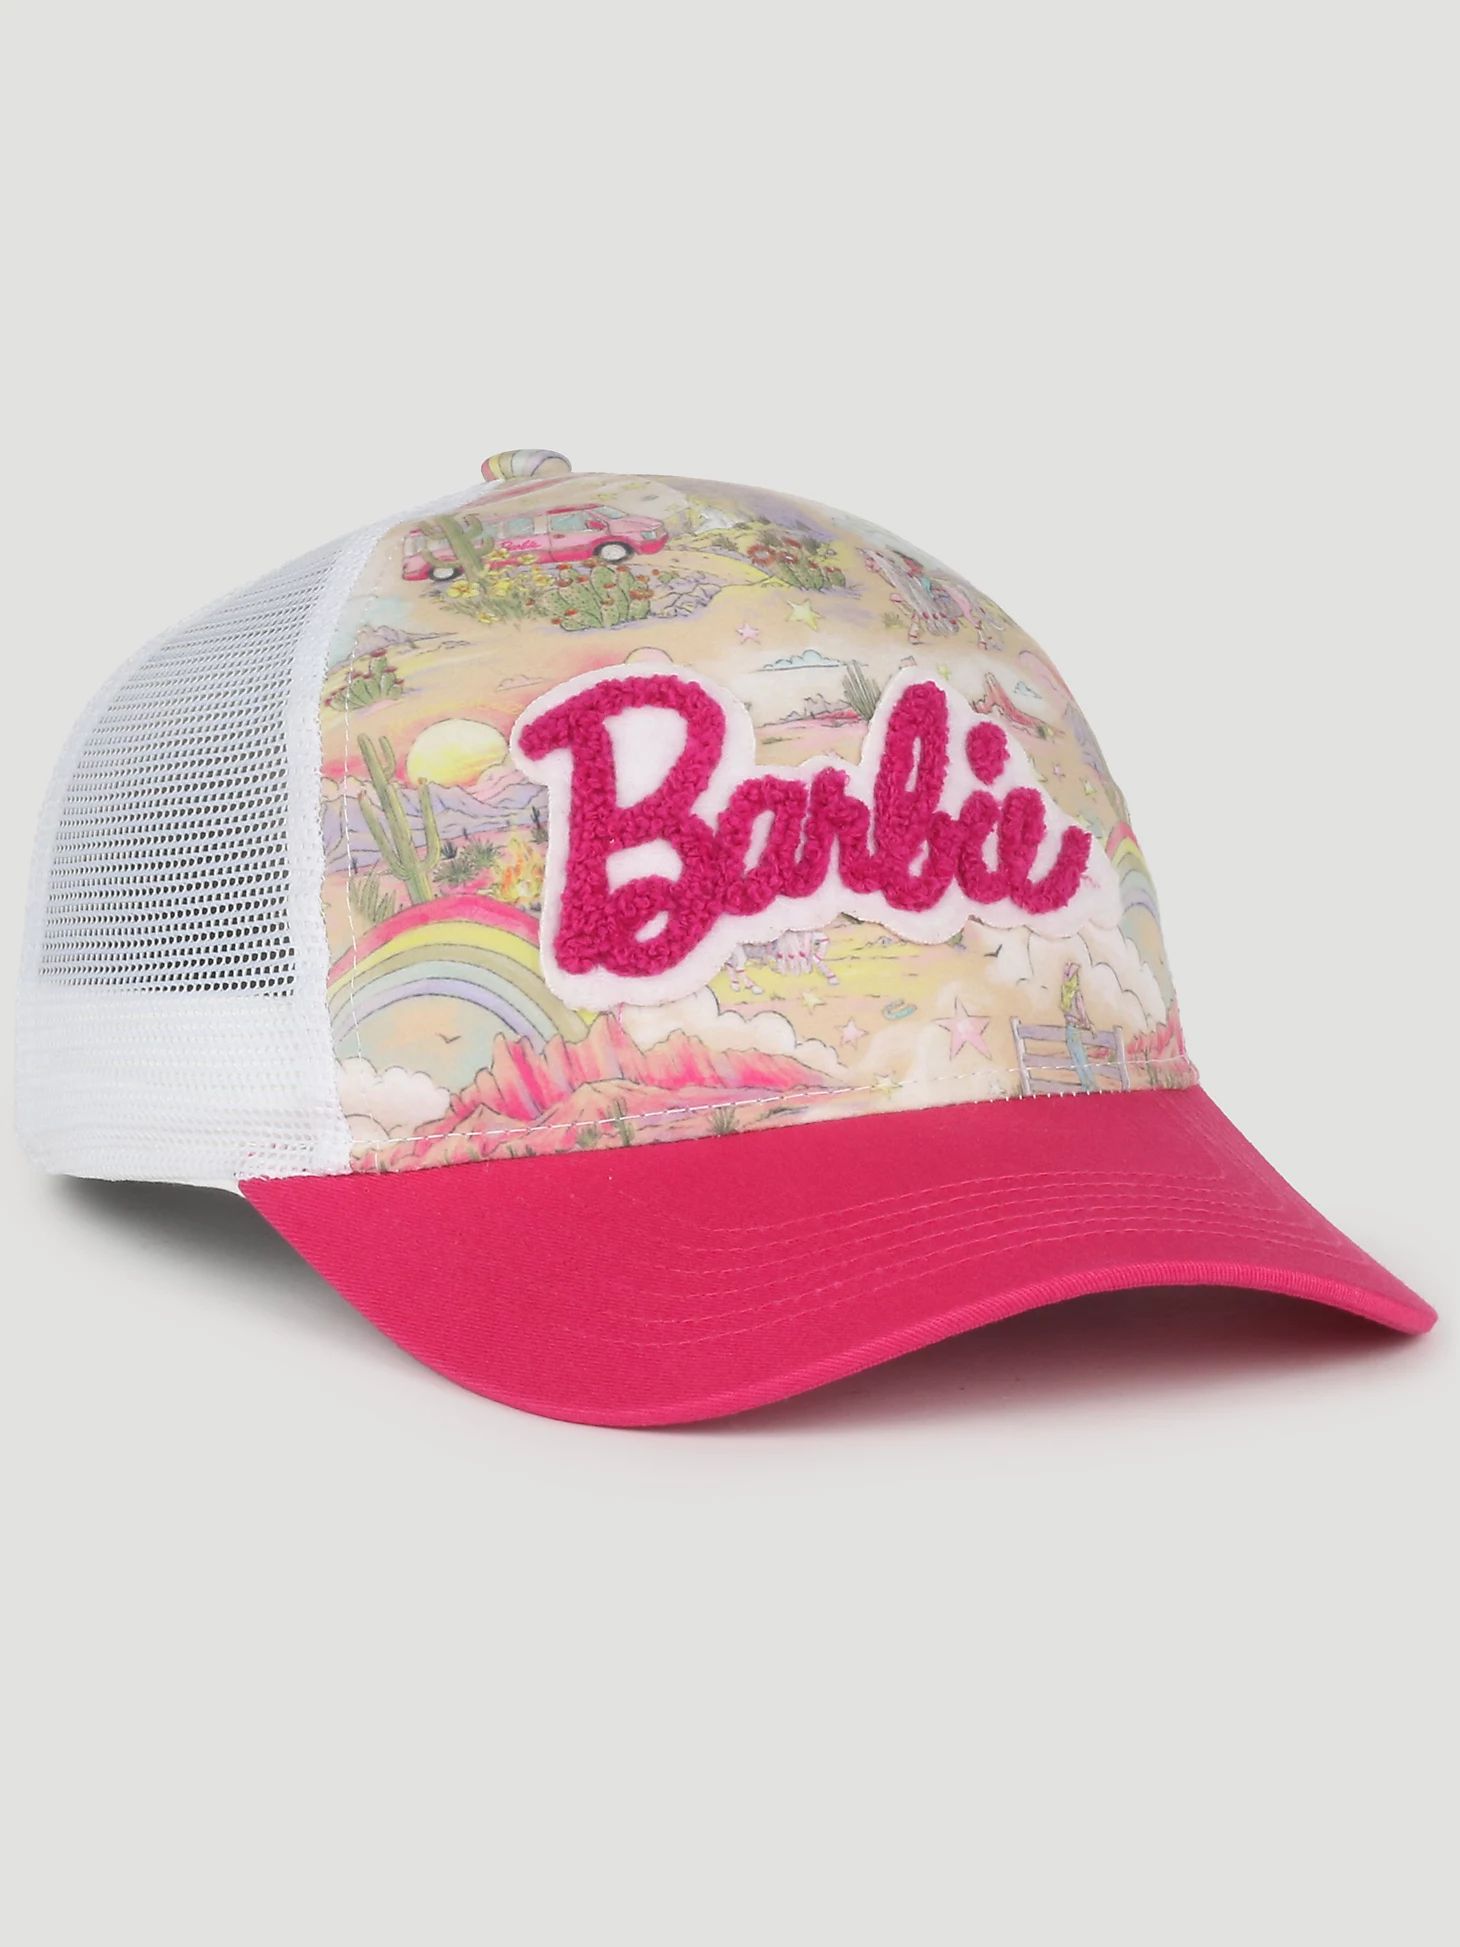 Wrangler x Barbie™ Girl's Illustrated Mesh Back Cap in Pink | Wrangler